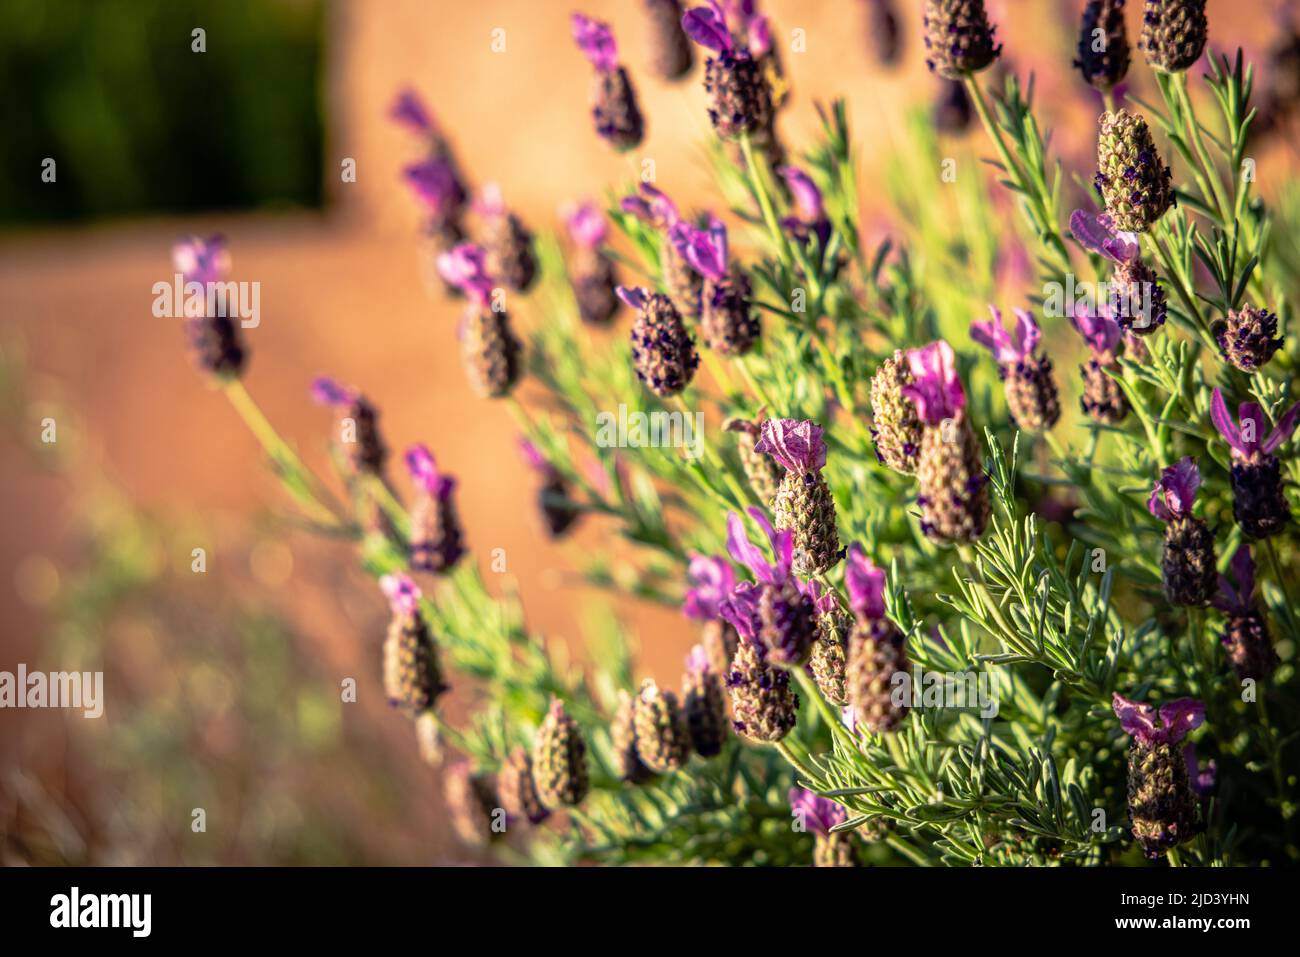 A fragrant lavender plant in the backyard. Stock Photo